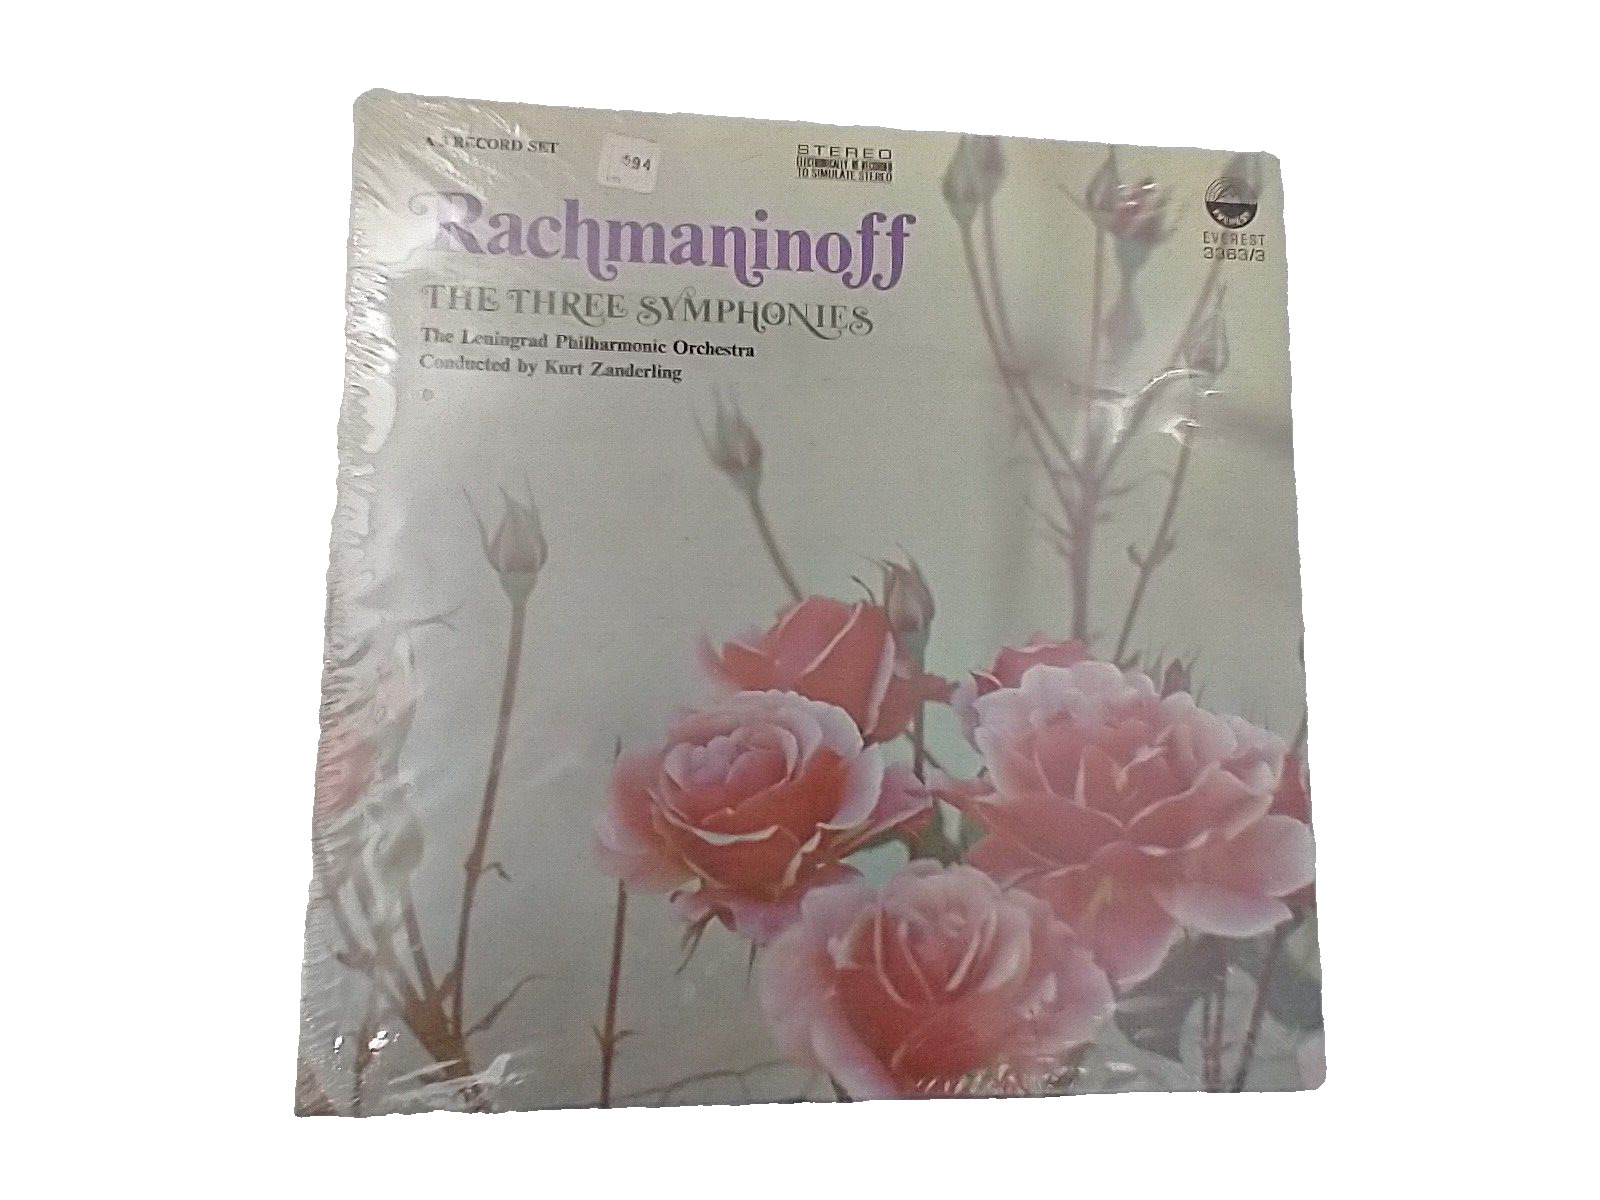 Rachmaninoff The Three Symphonies Kurt Zanderling Everest 3363/3 Set Of 3 LP Box